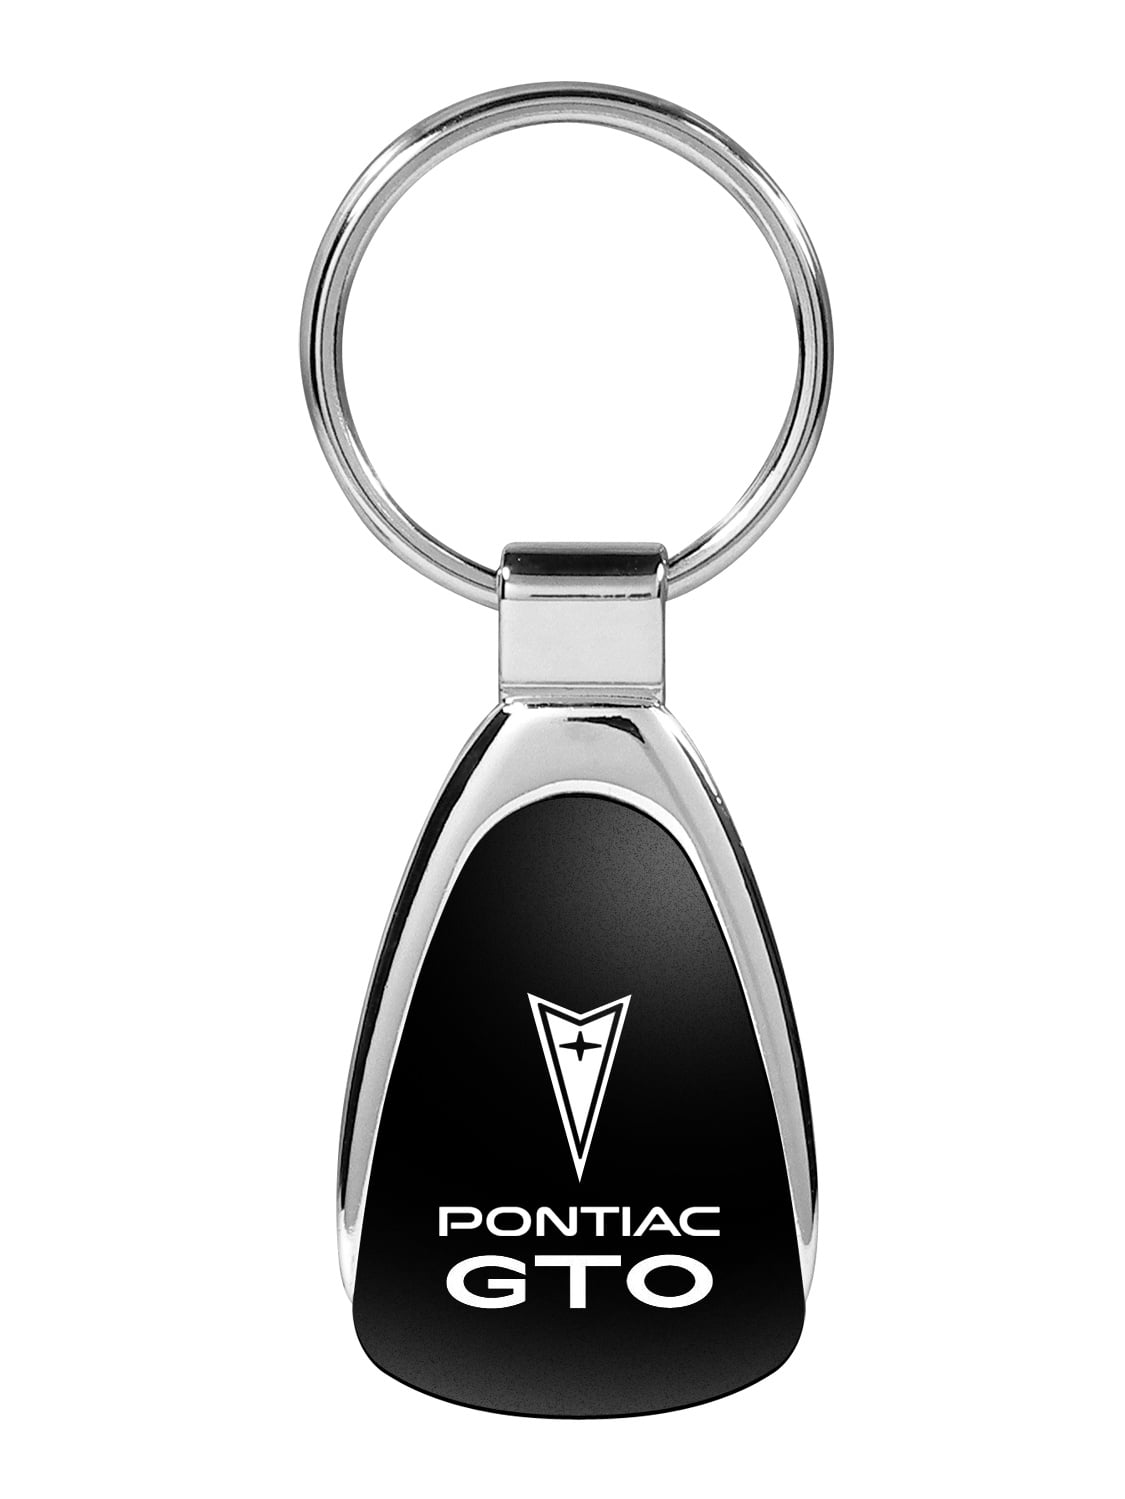 Pontiac 2+2 keychain set 2 pack black 1965 1966 